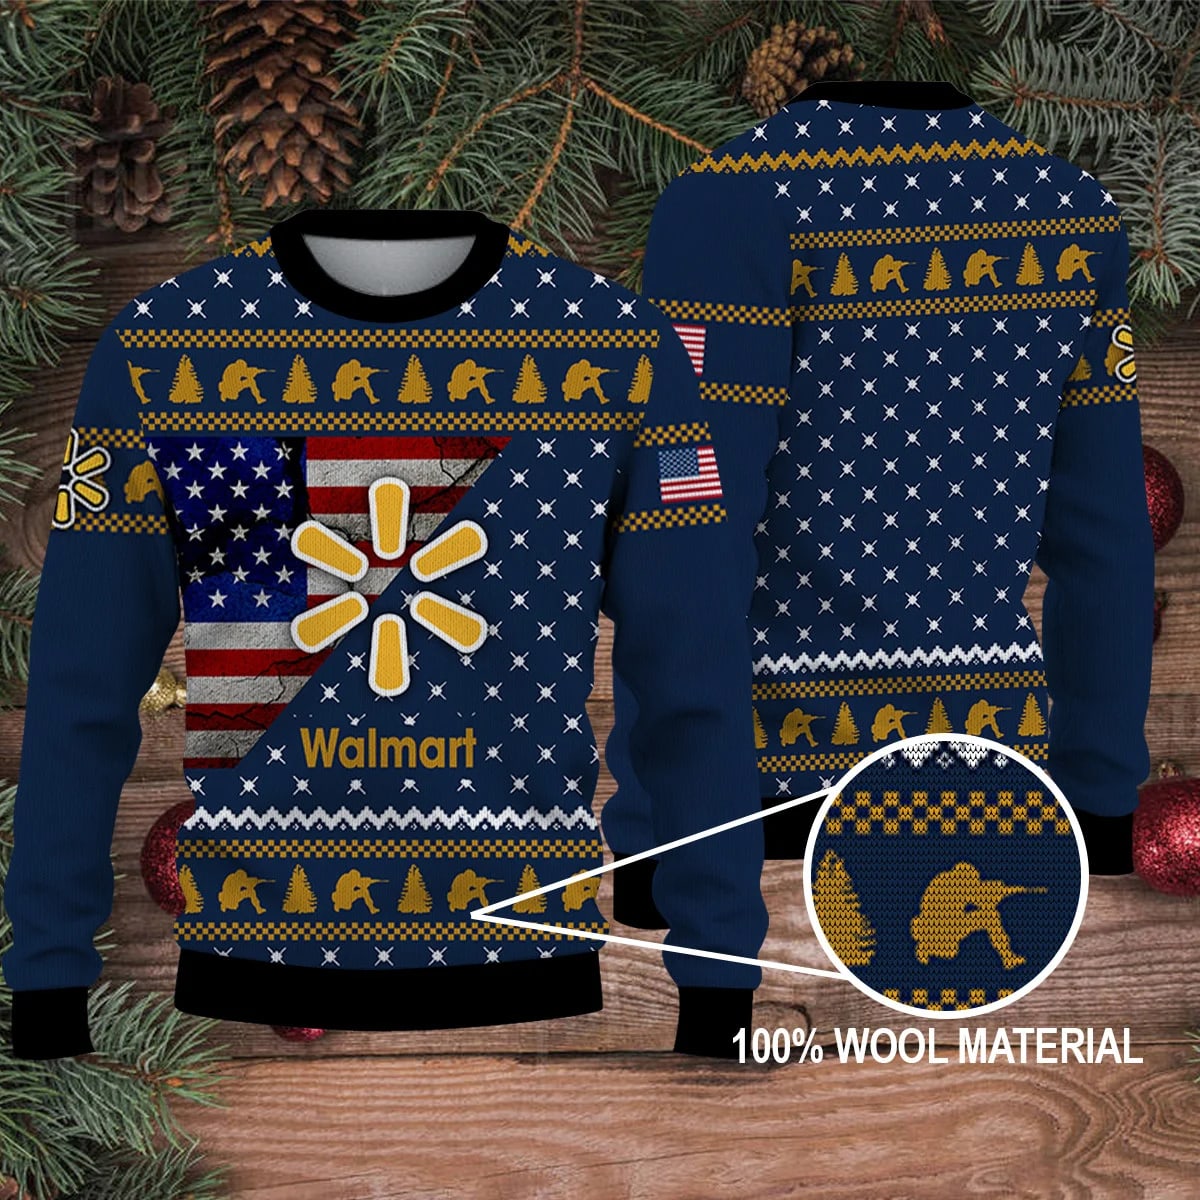 Merry Christmas 2023 Ugly Sweater Walmart Dlioir.jpg